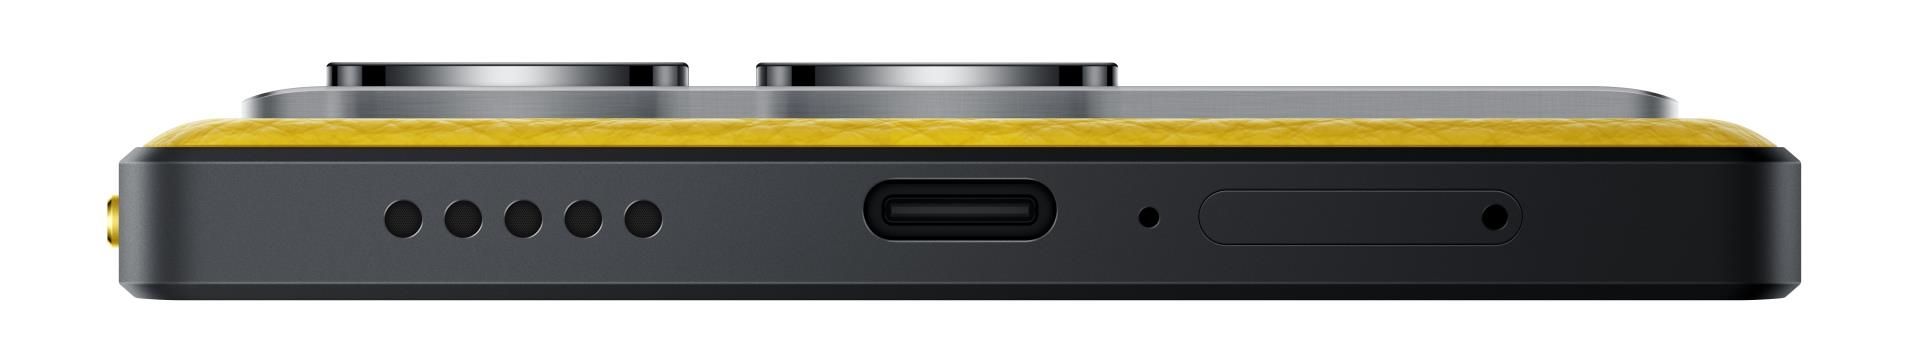 Смартфон POCO X6 Pro 8/256 Гб желтый